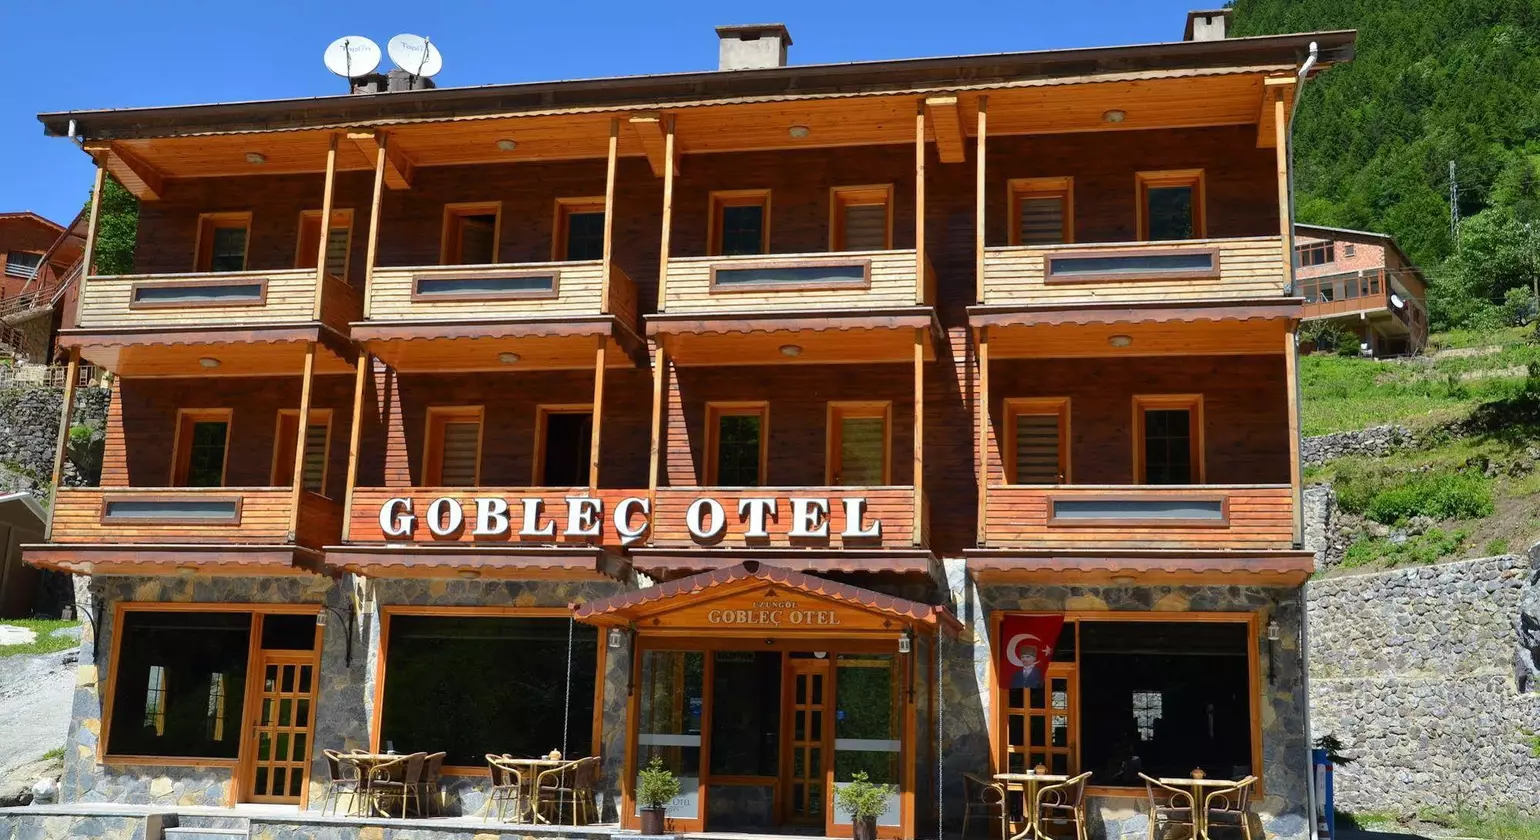 Goblec Hotel